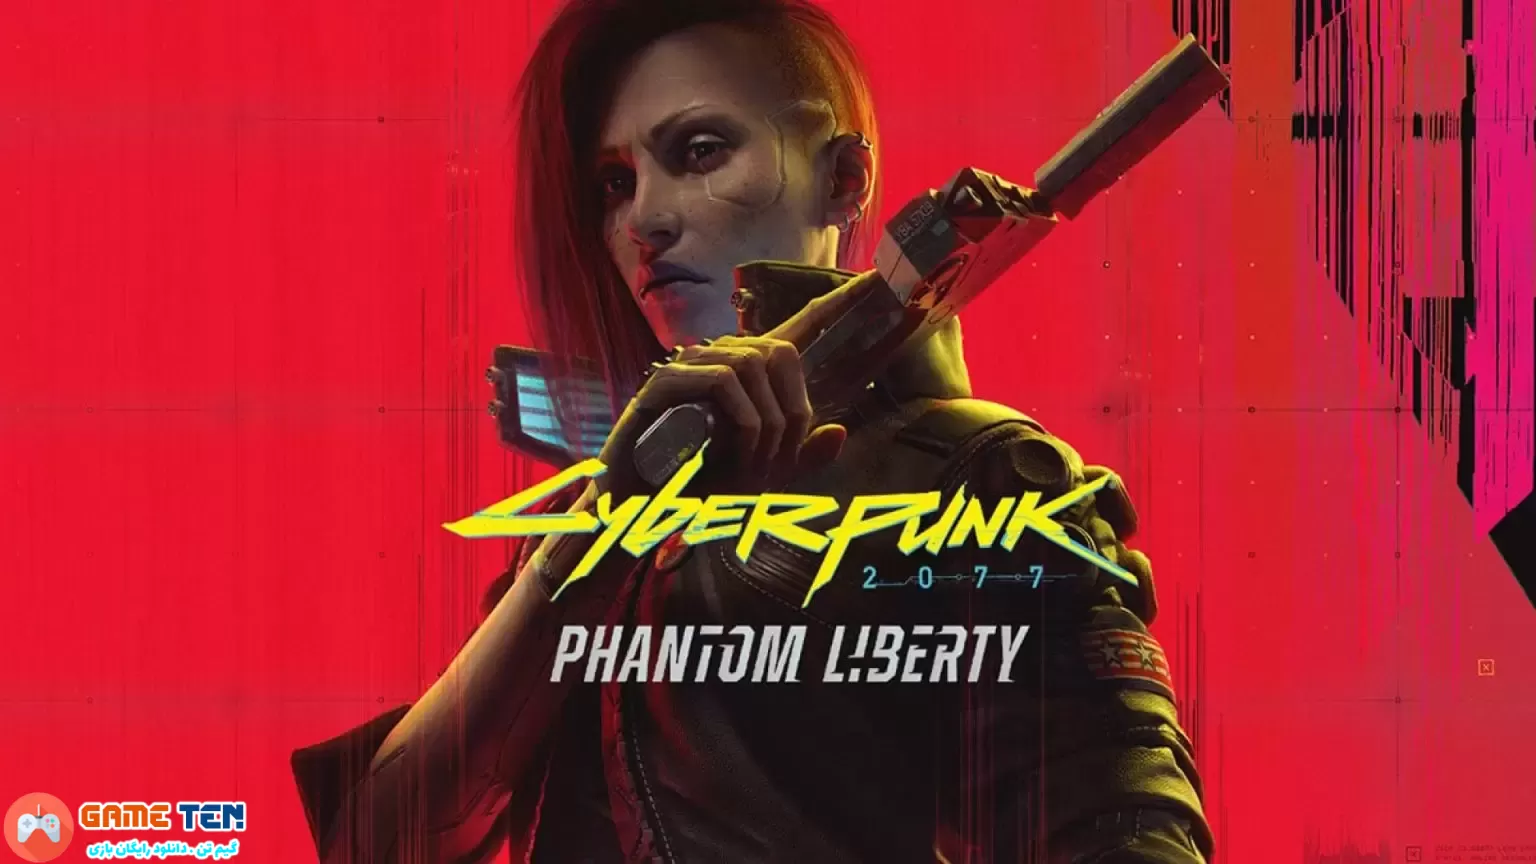 Cyberpunk 2077: Phantom Liberty به 23 درصد نرخ نصب در 3 ماه دست یافت